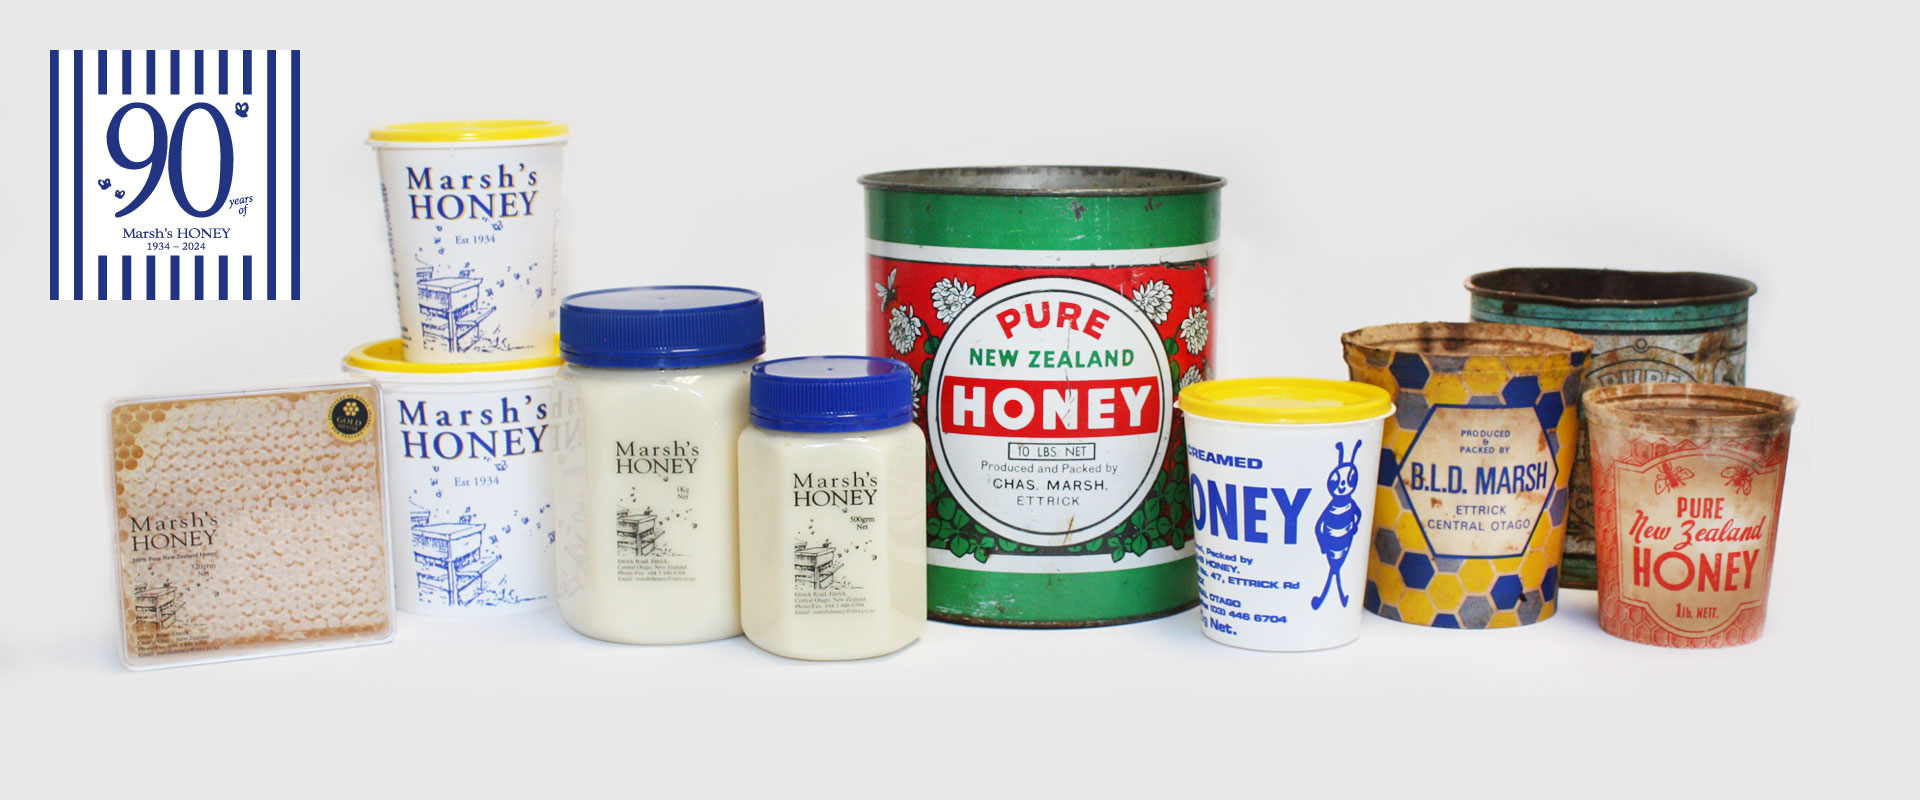 Marsh’s Honey. 100% Pure New Zealand Honey